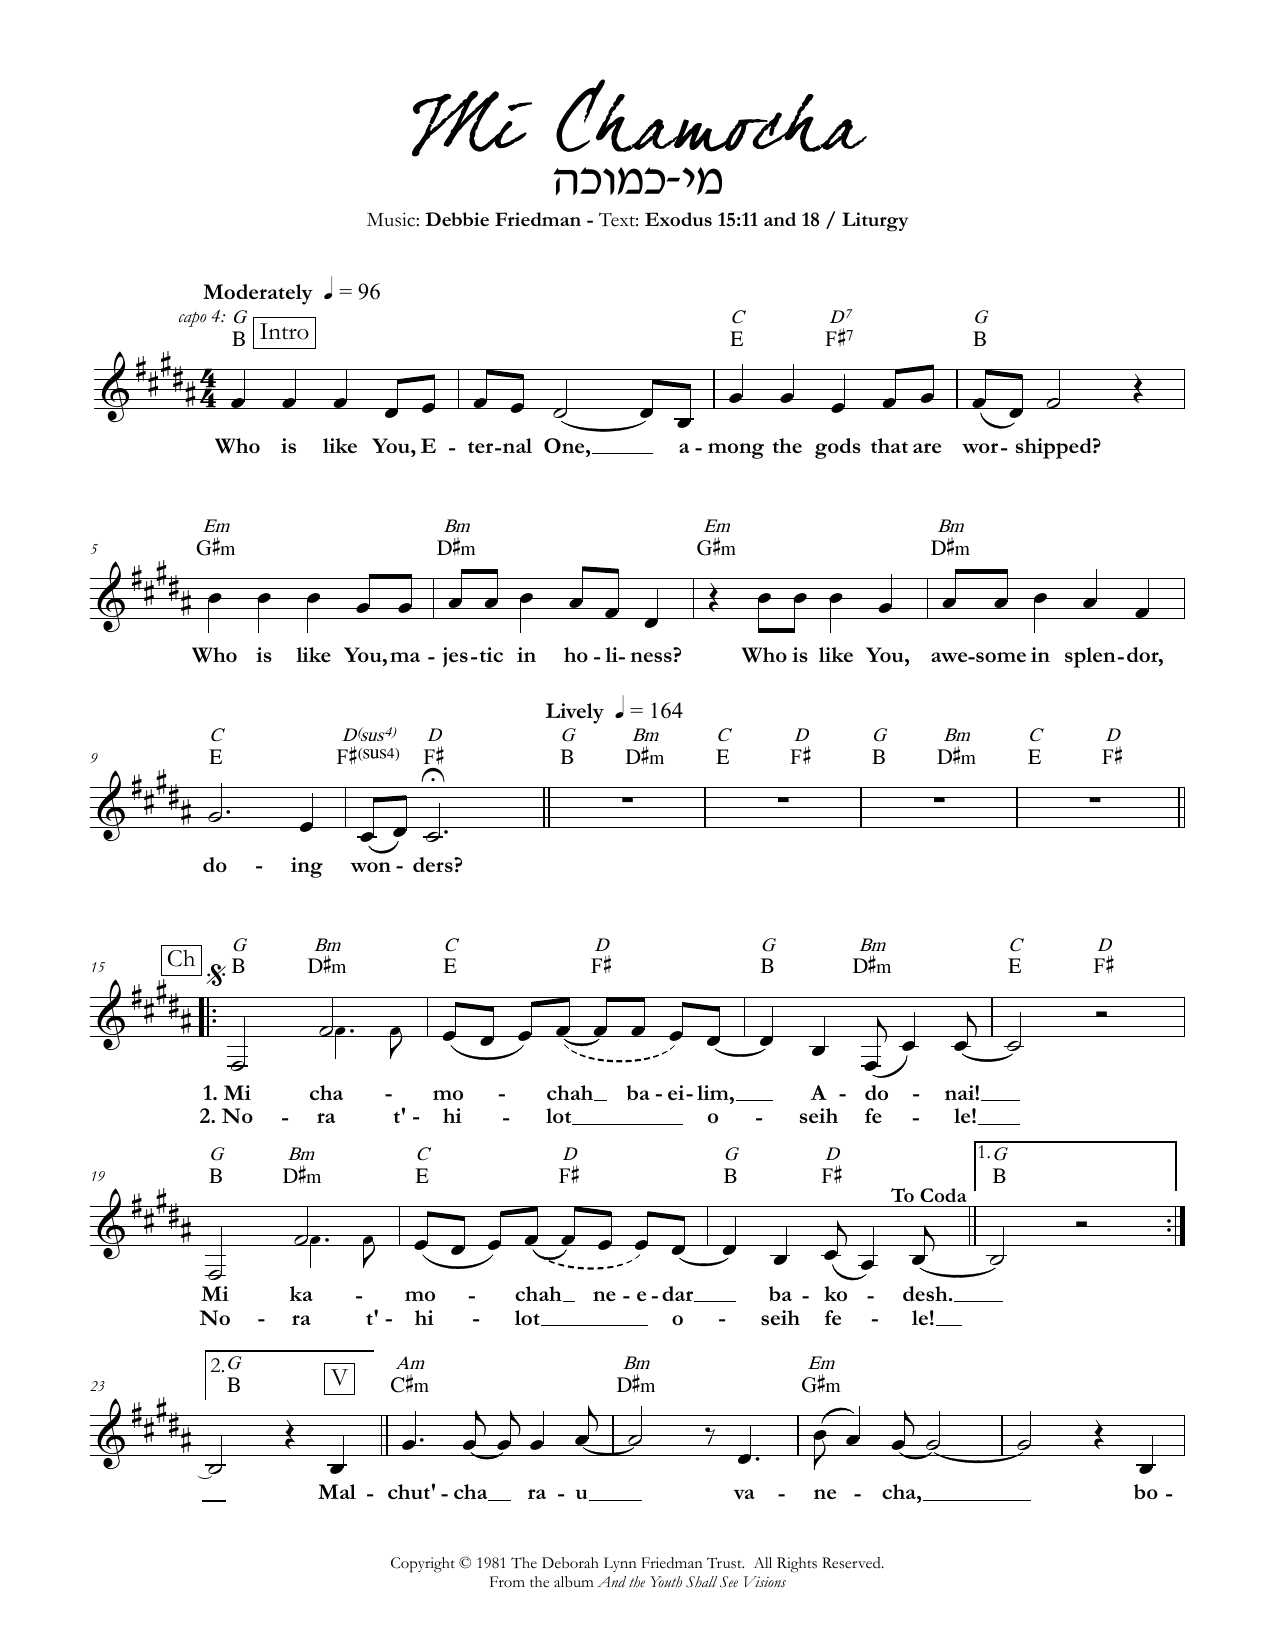 Download Debbie Friedman Mi Chamocha Sheet Music and learn how to play Lead Sheet / Fake Book PDF digital score in minutes